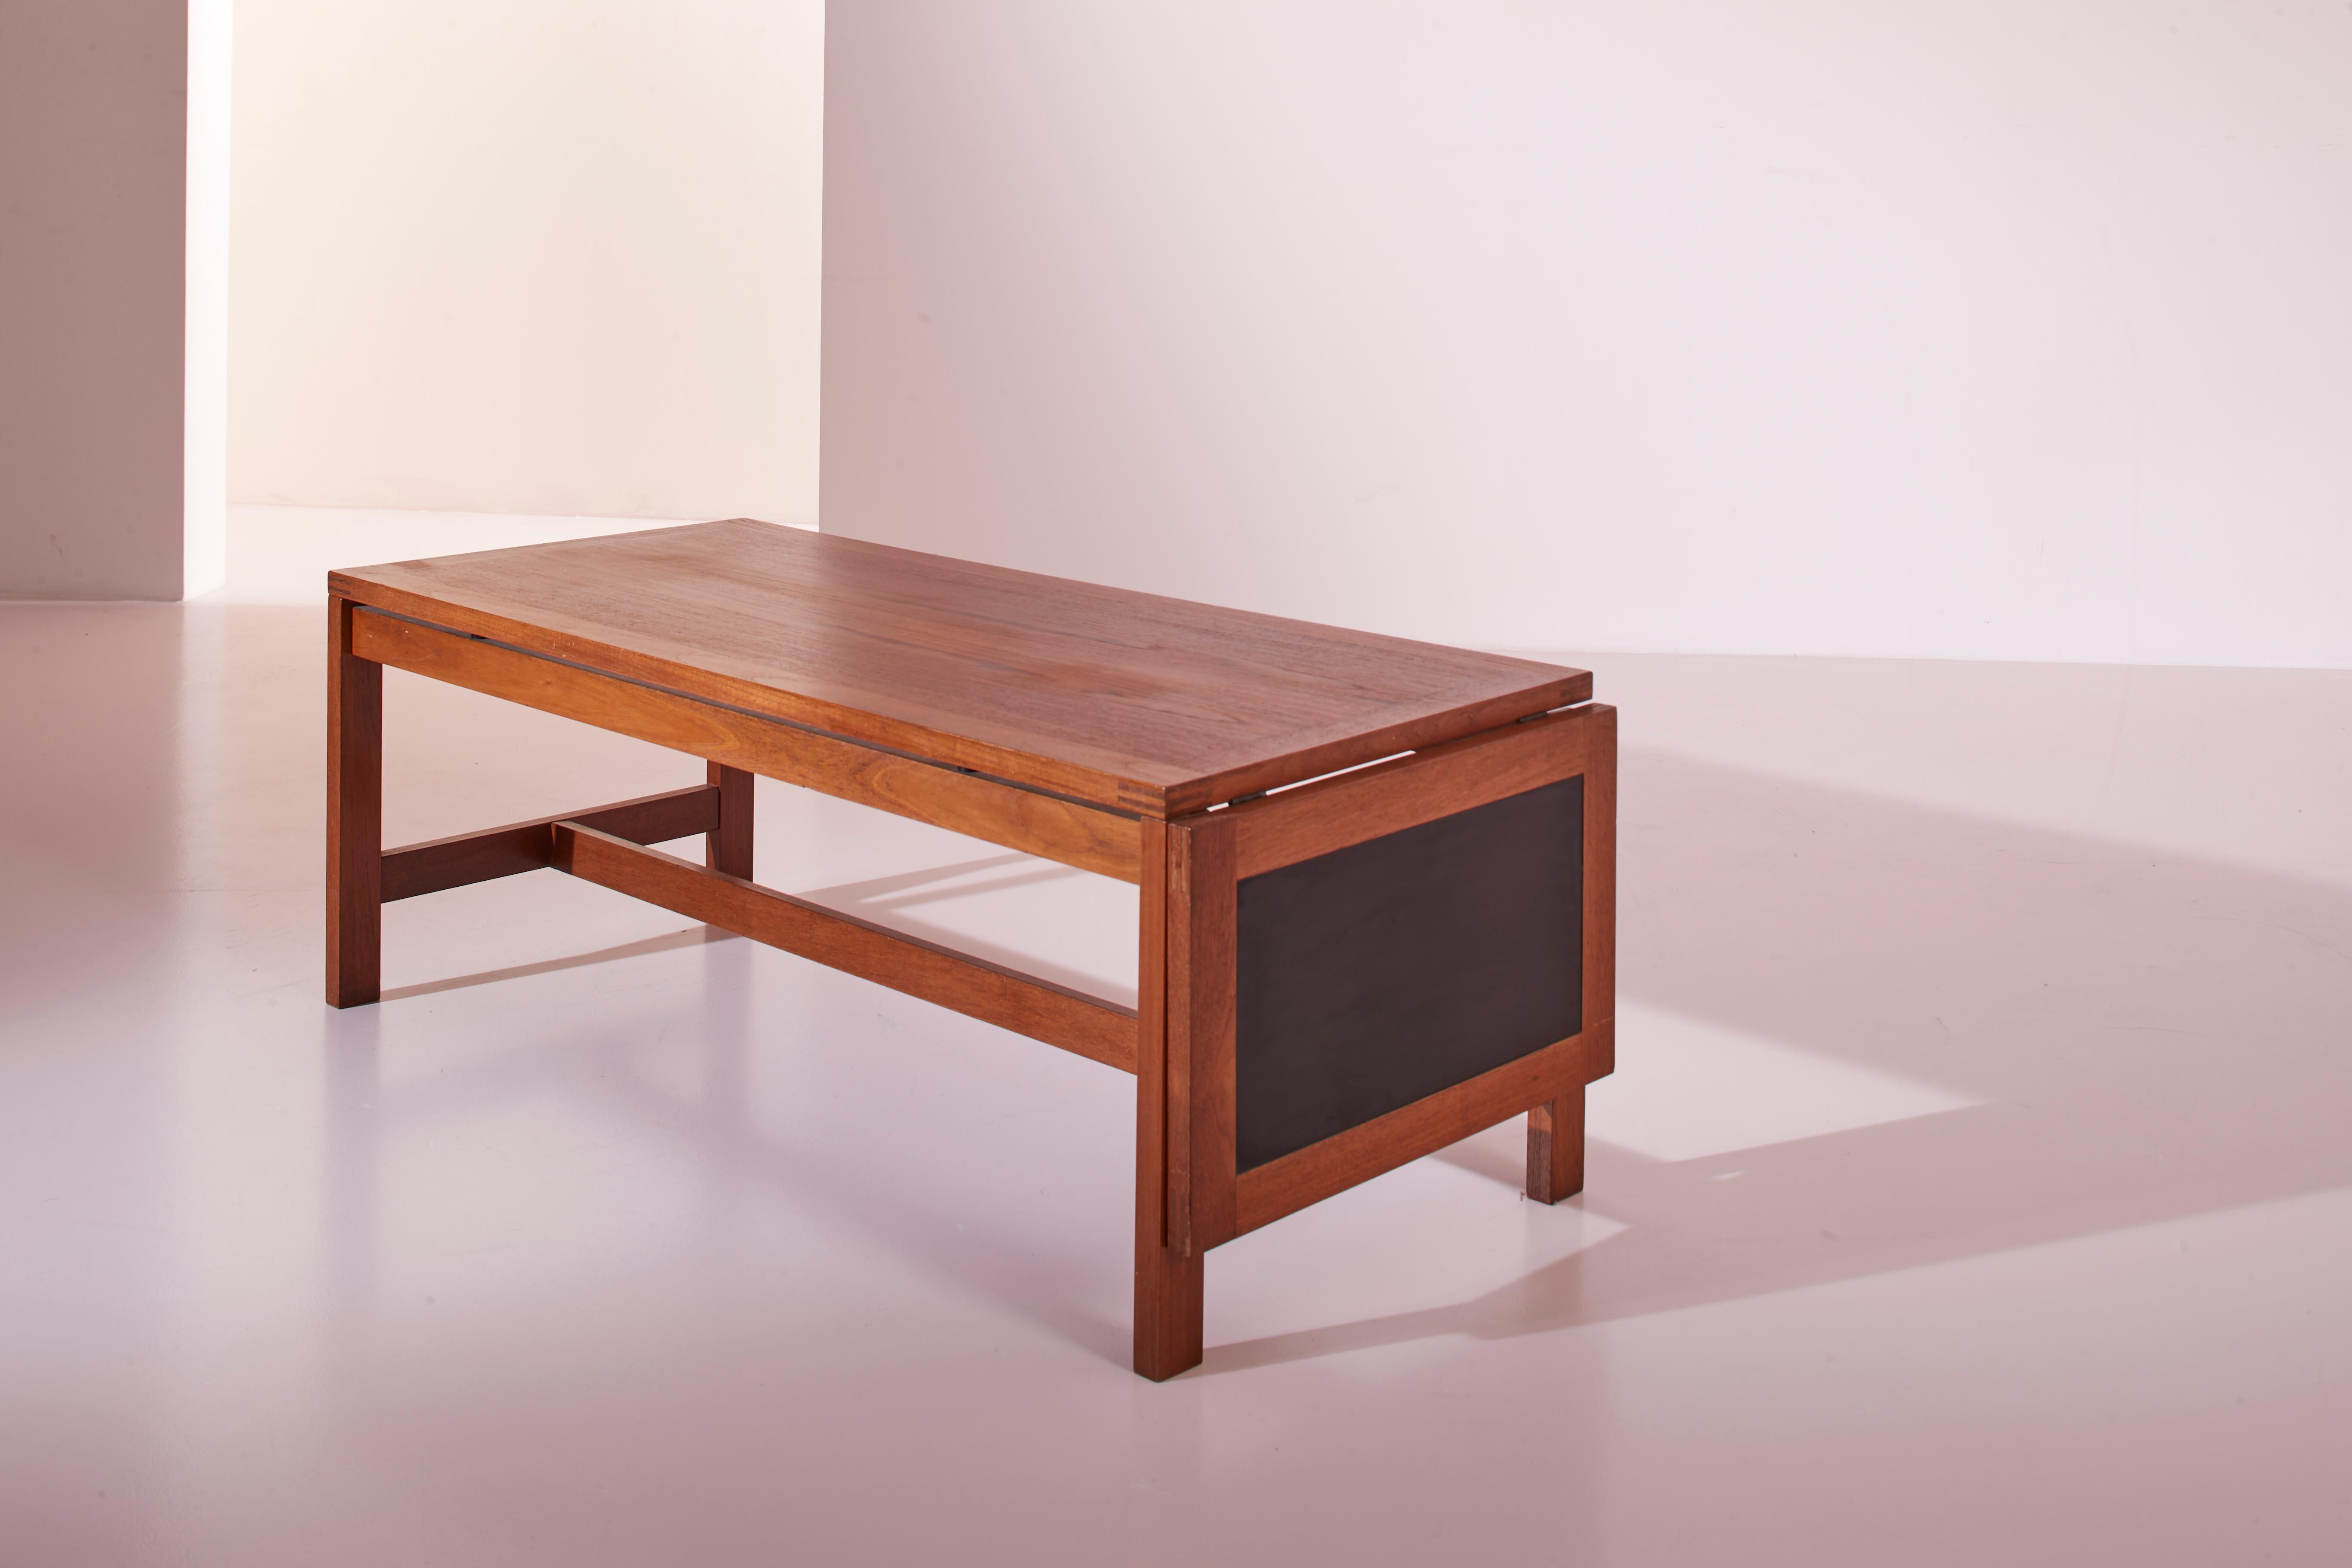 Scandinavian Modern France & Son solid teak extendable coffee table, Denmark, 1960s For Sale